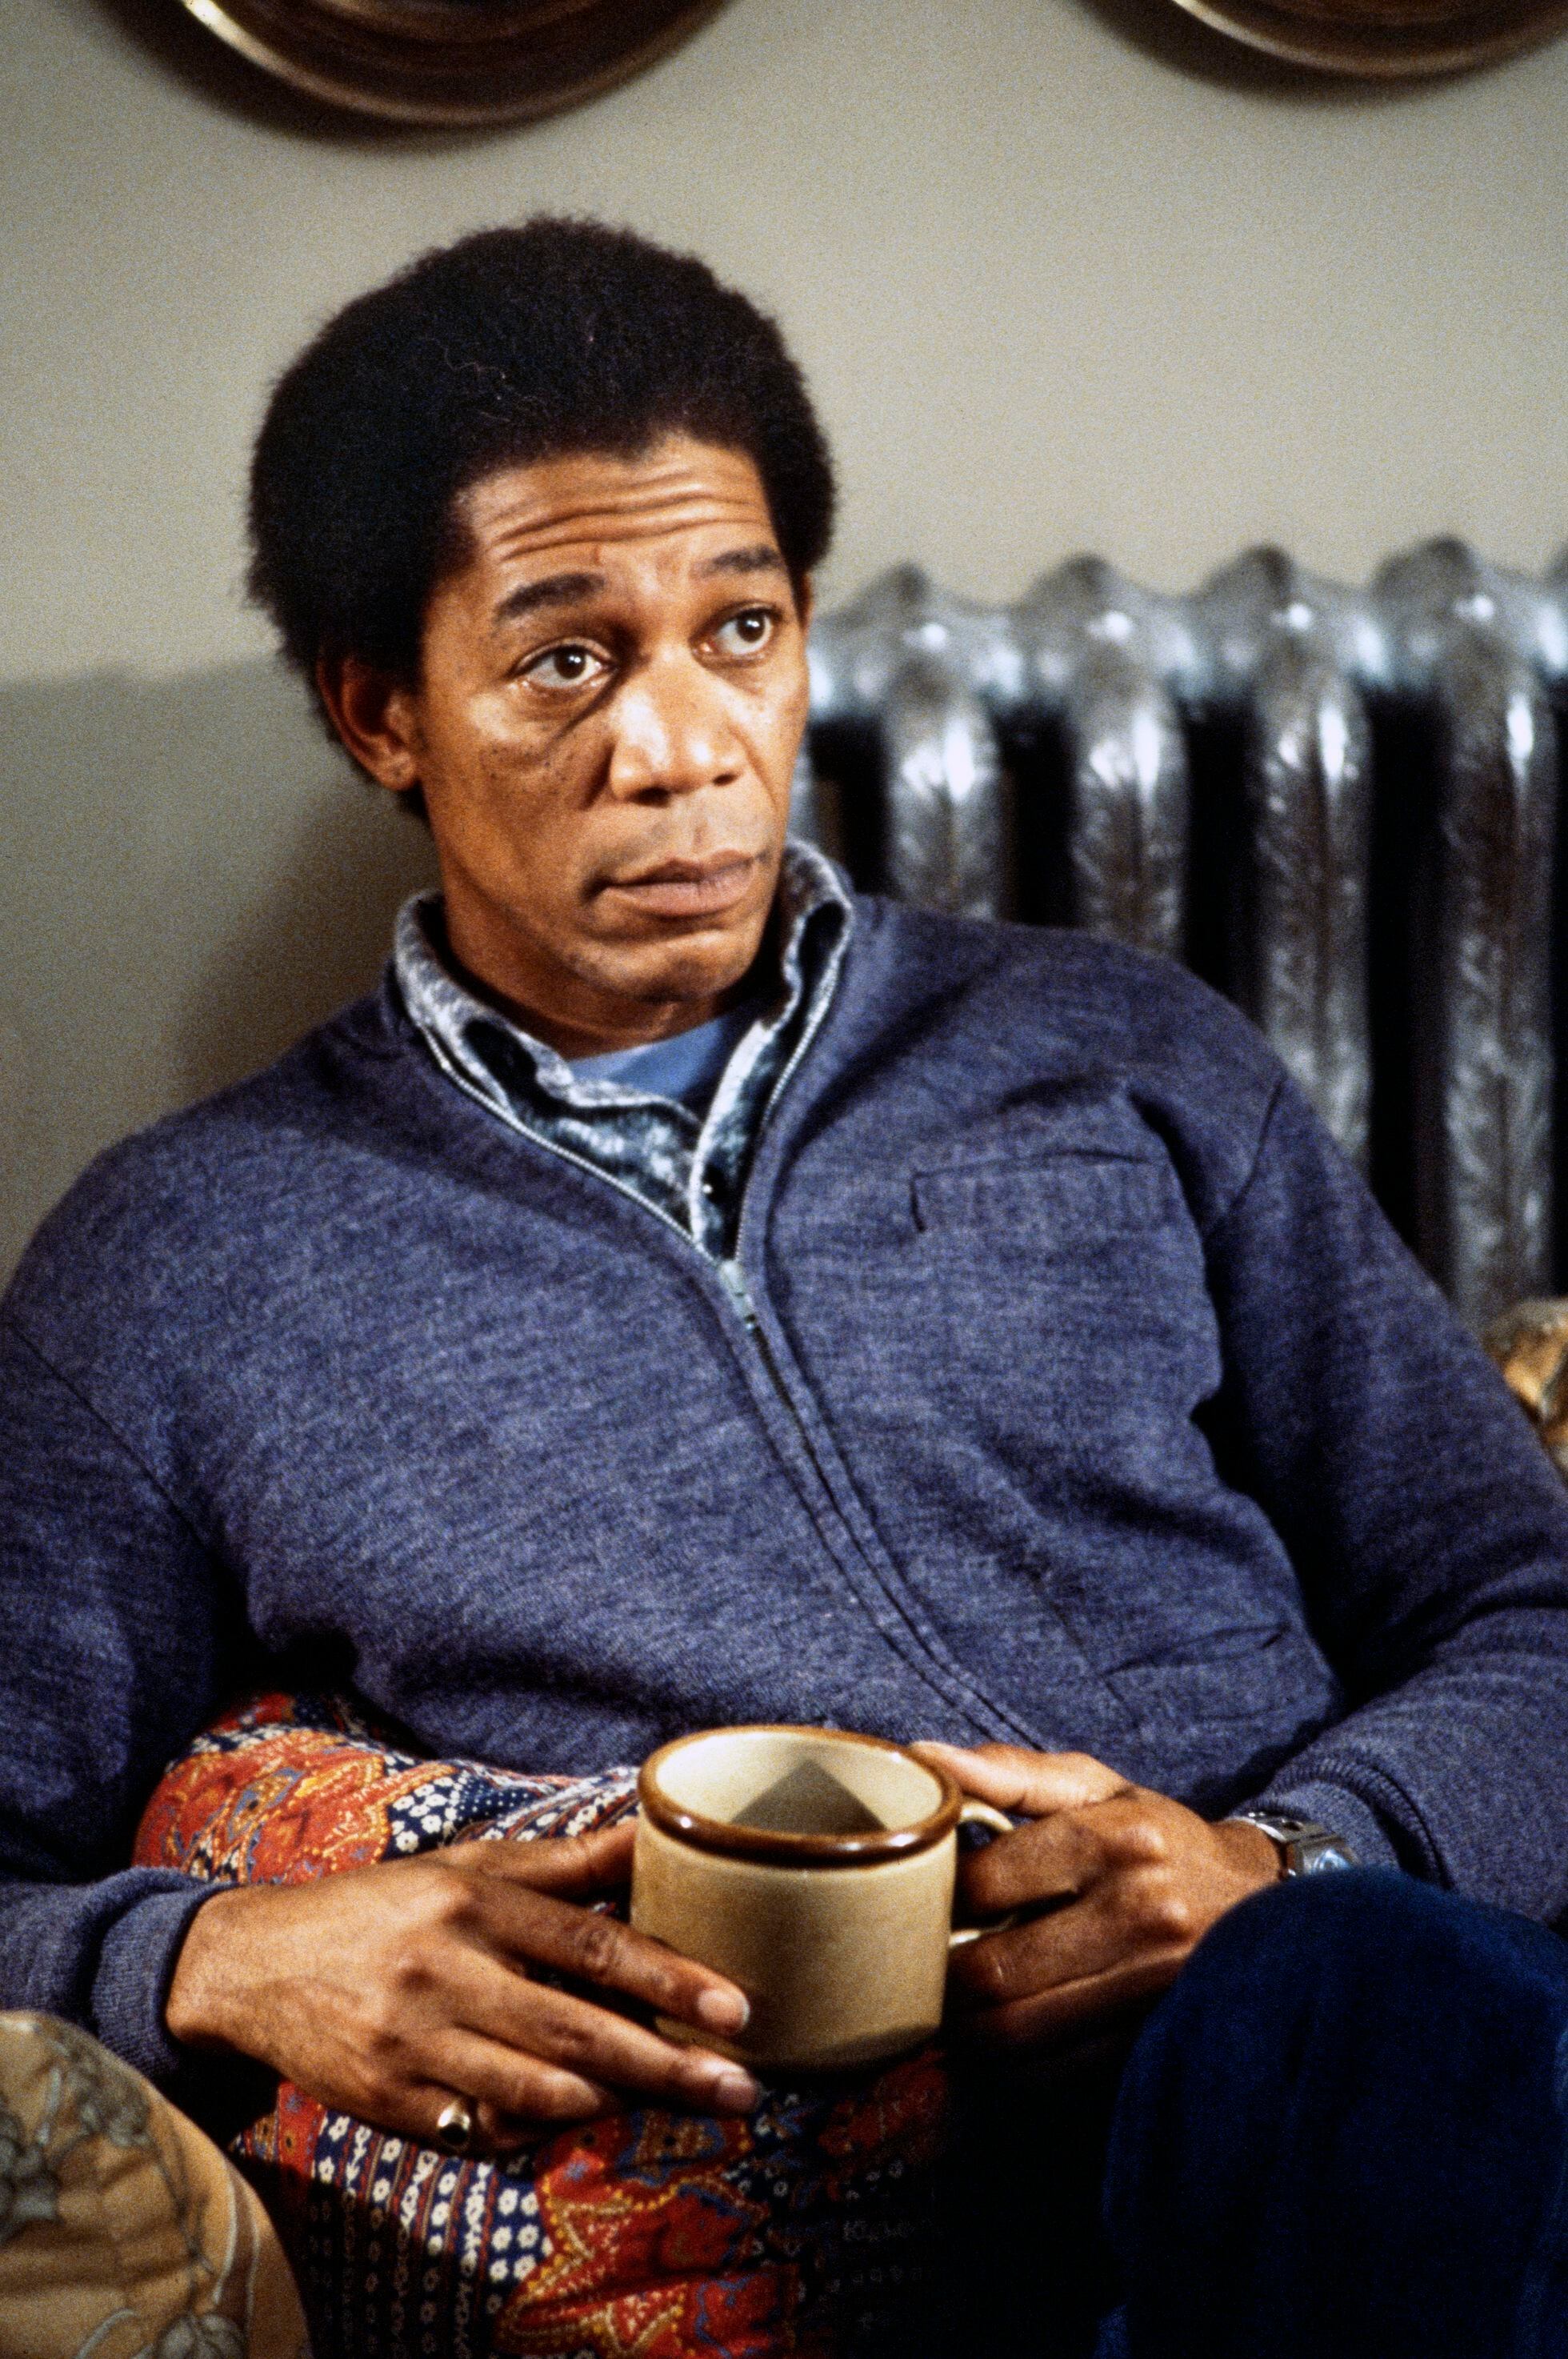 Morgan Freeman in 1981.CBS PHOTO ARCHIVE (CBS VIA GETTY IMAGES)